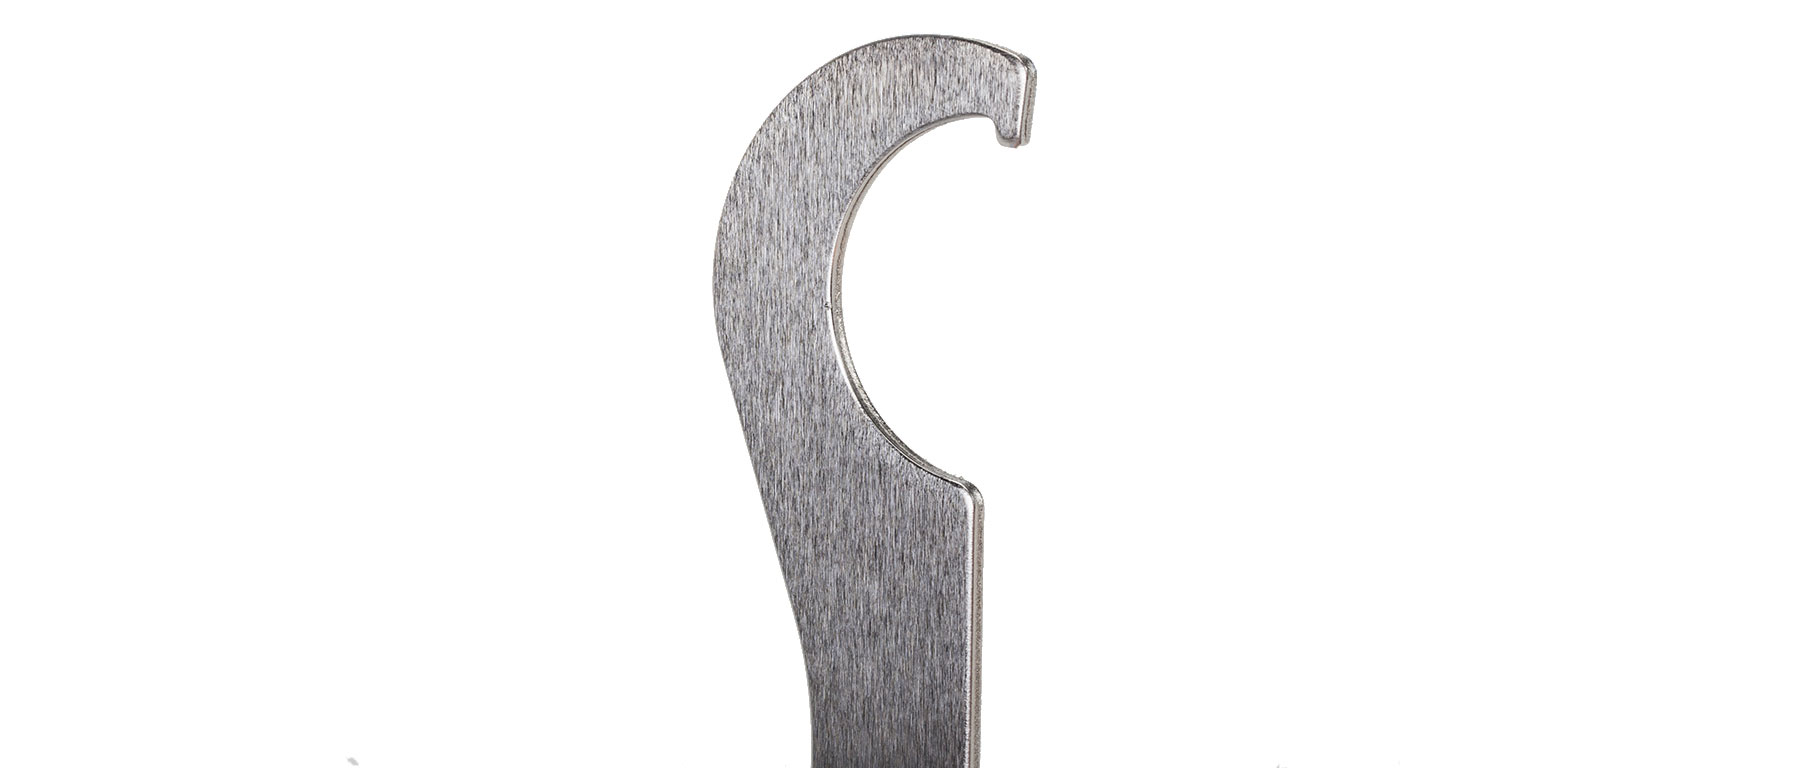 Park Tool HCW-5 Bottom Bracket Lockring Wrench